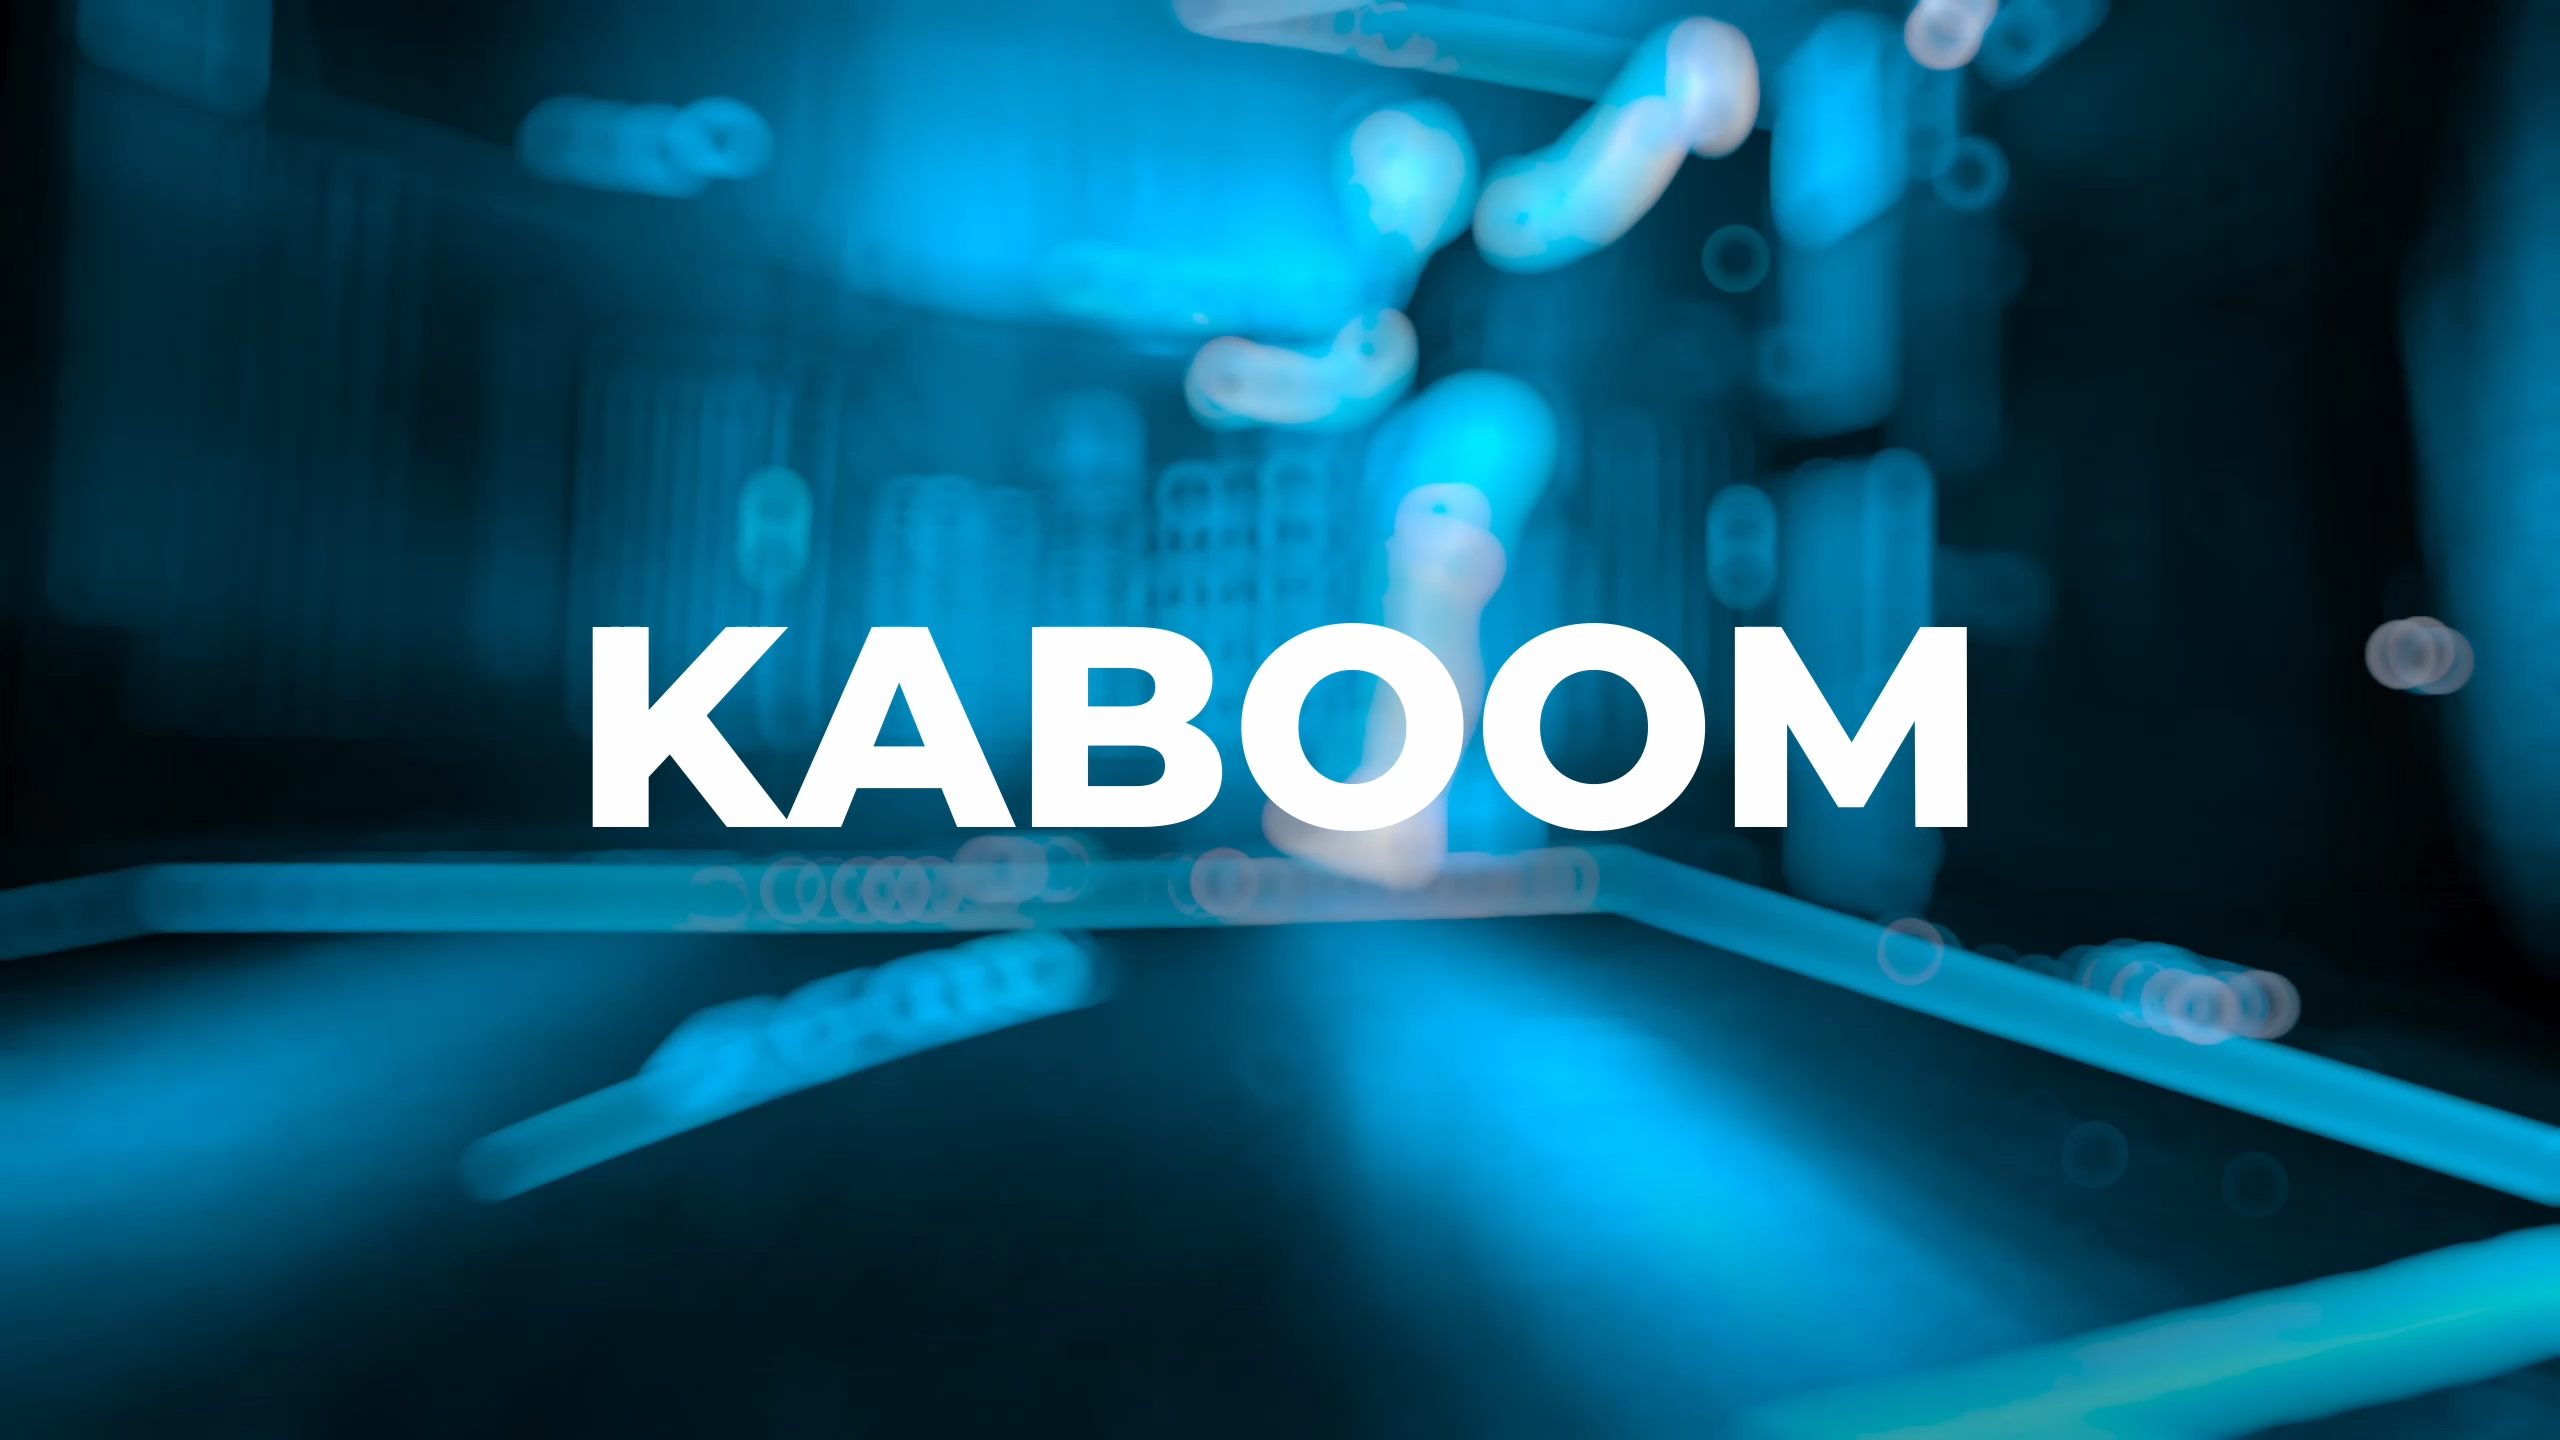 Kaboom tutorial - placeholder image